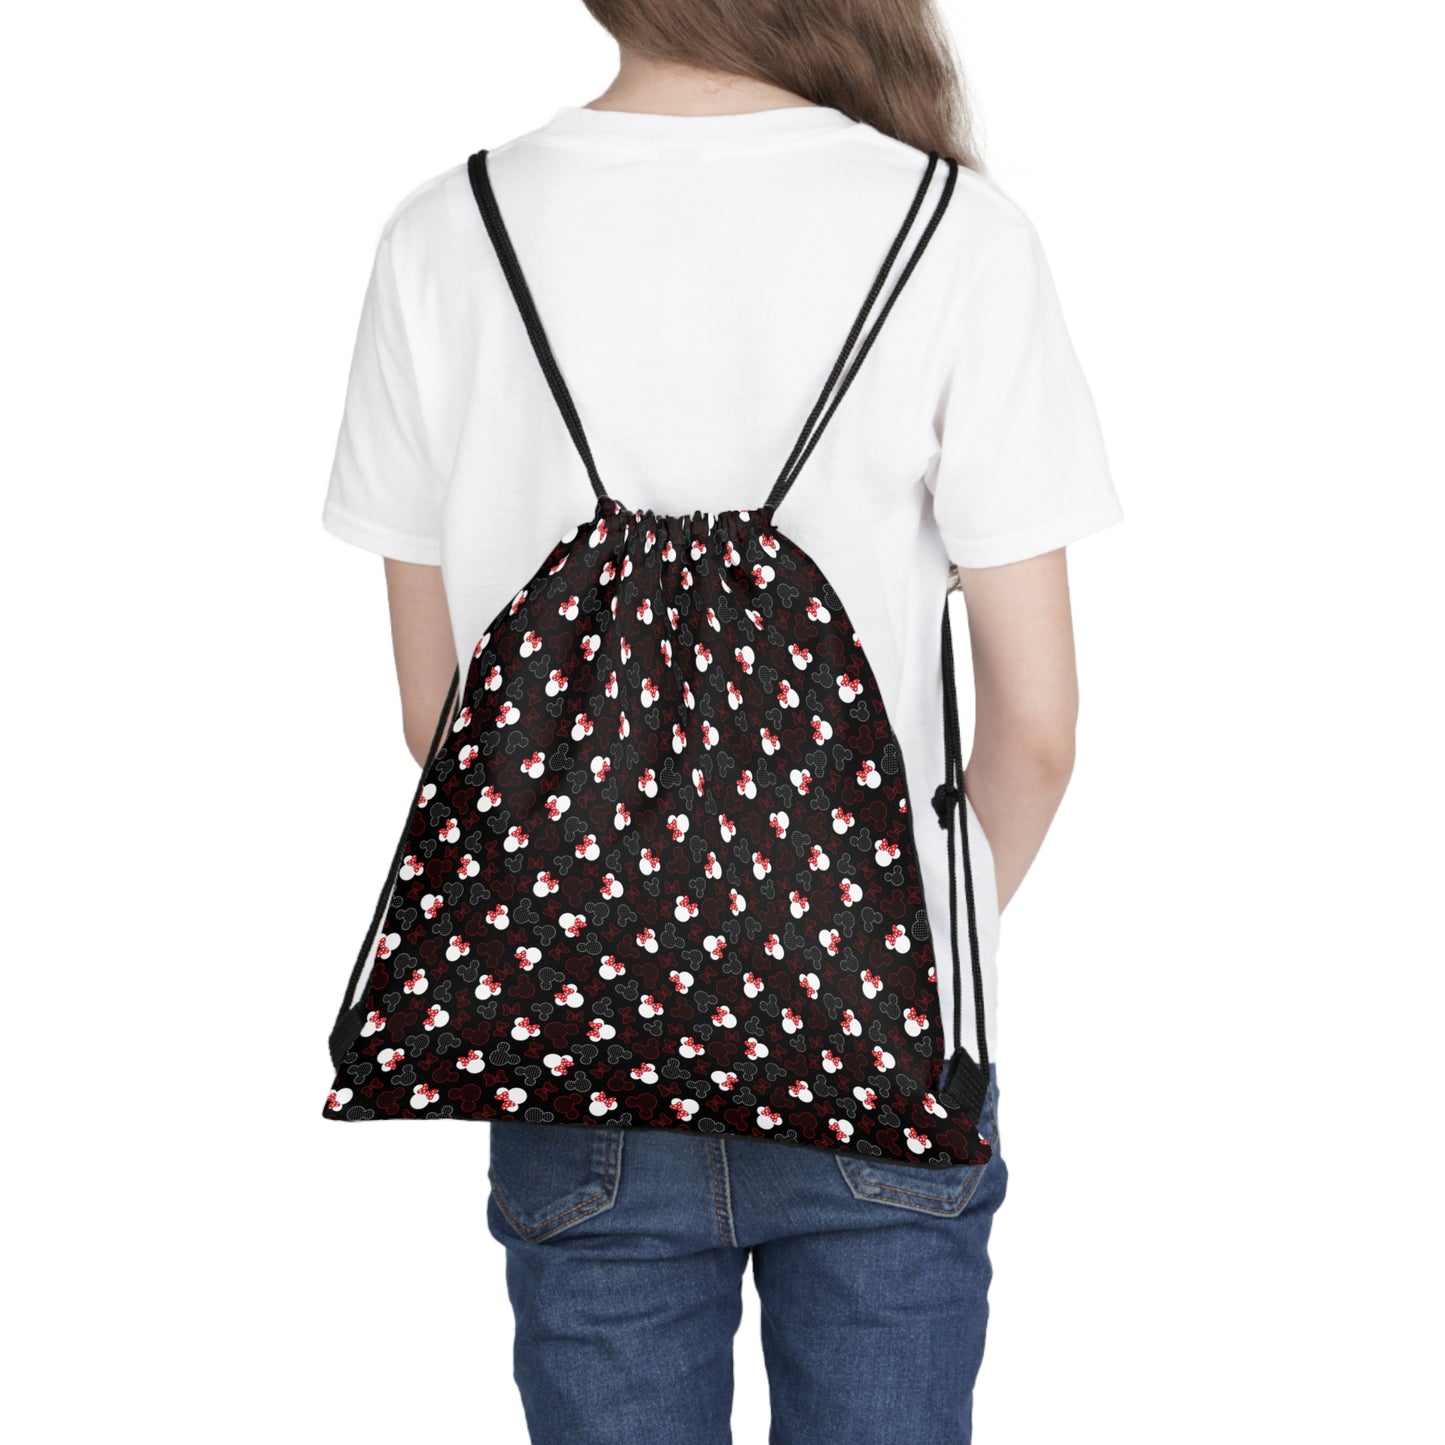 Mickey And Minnie Dots Drawstring Bag